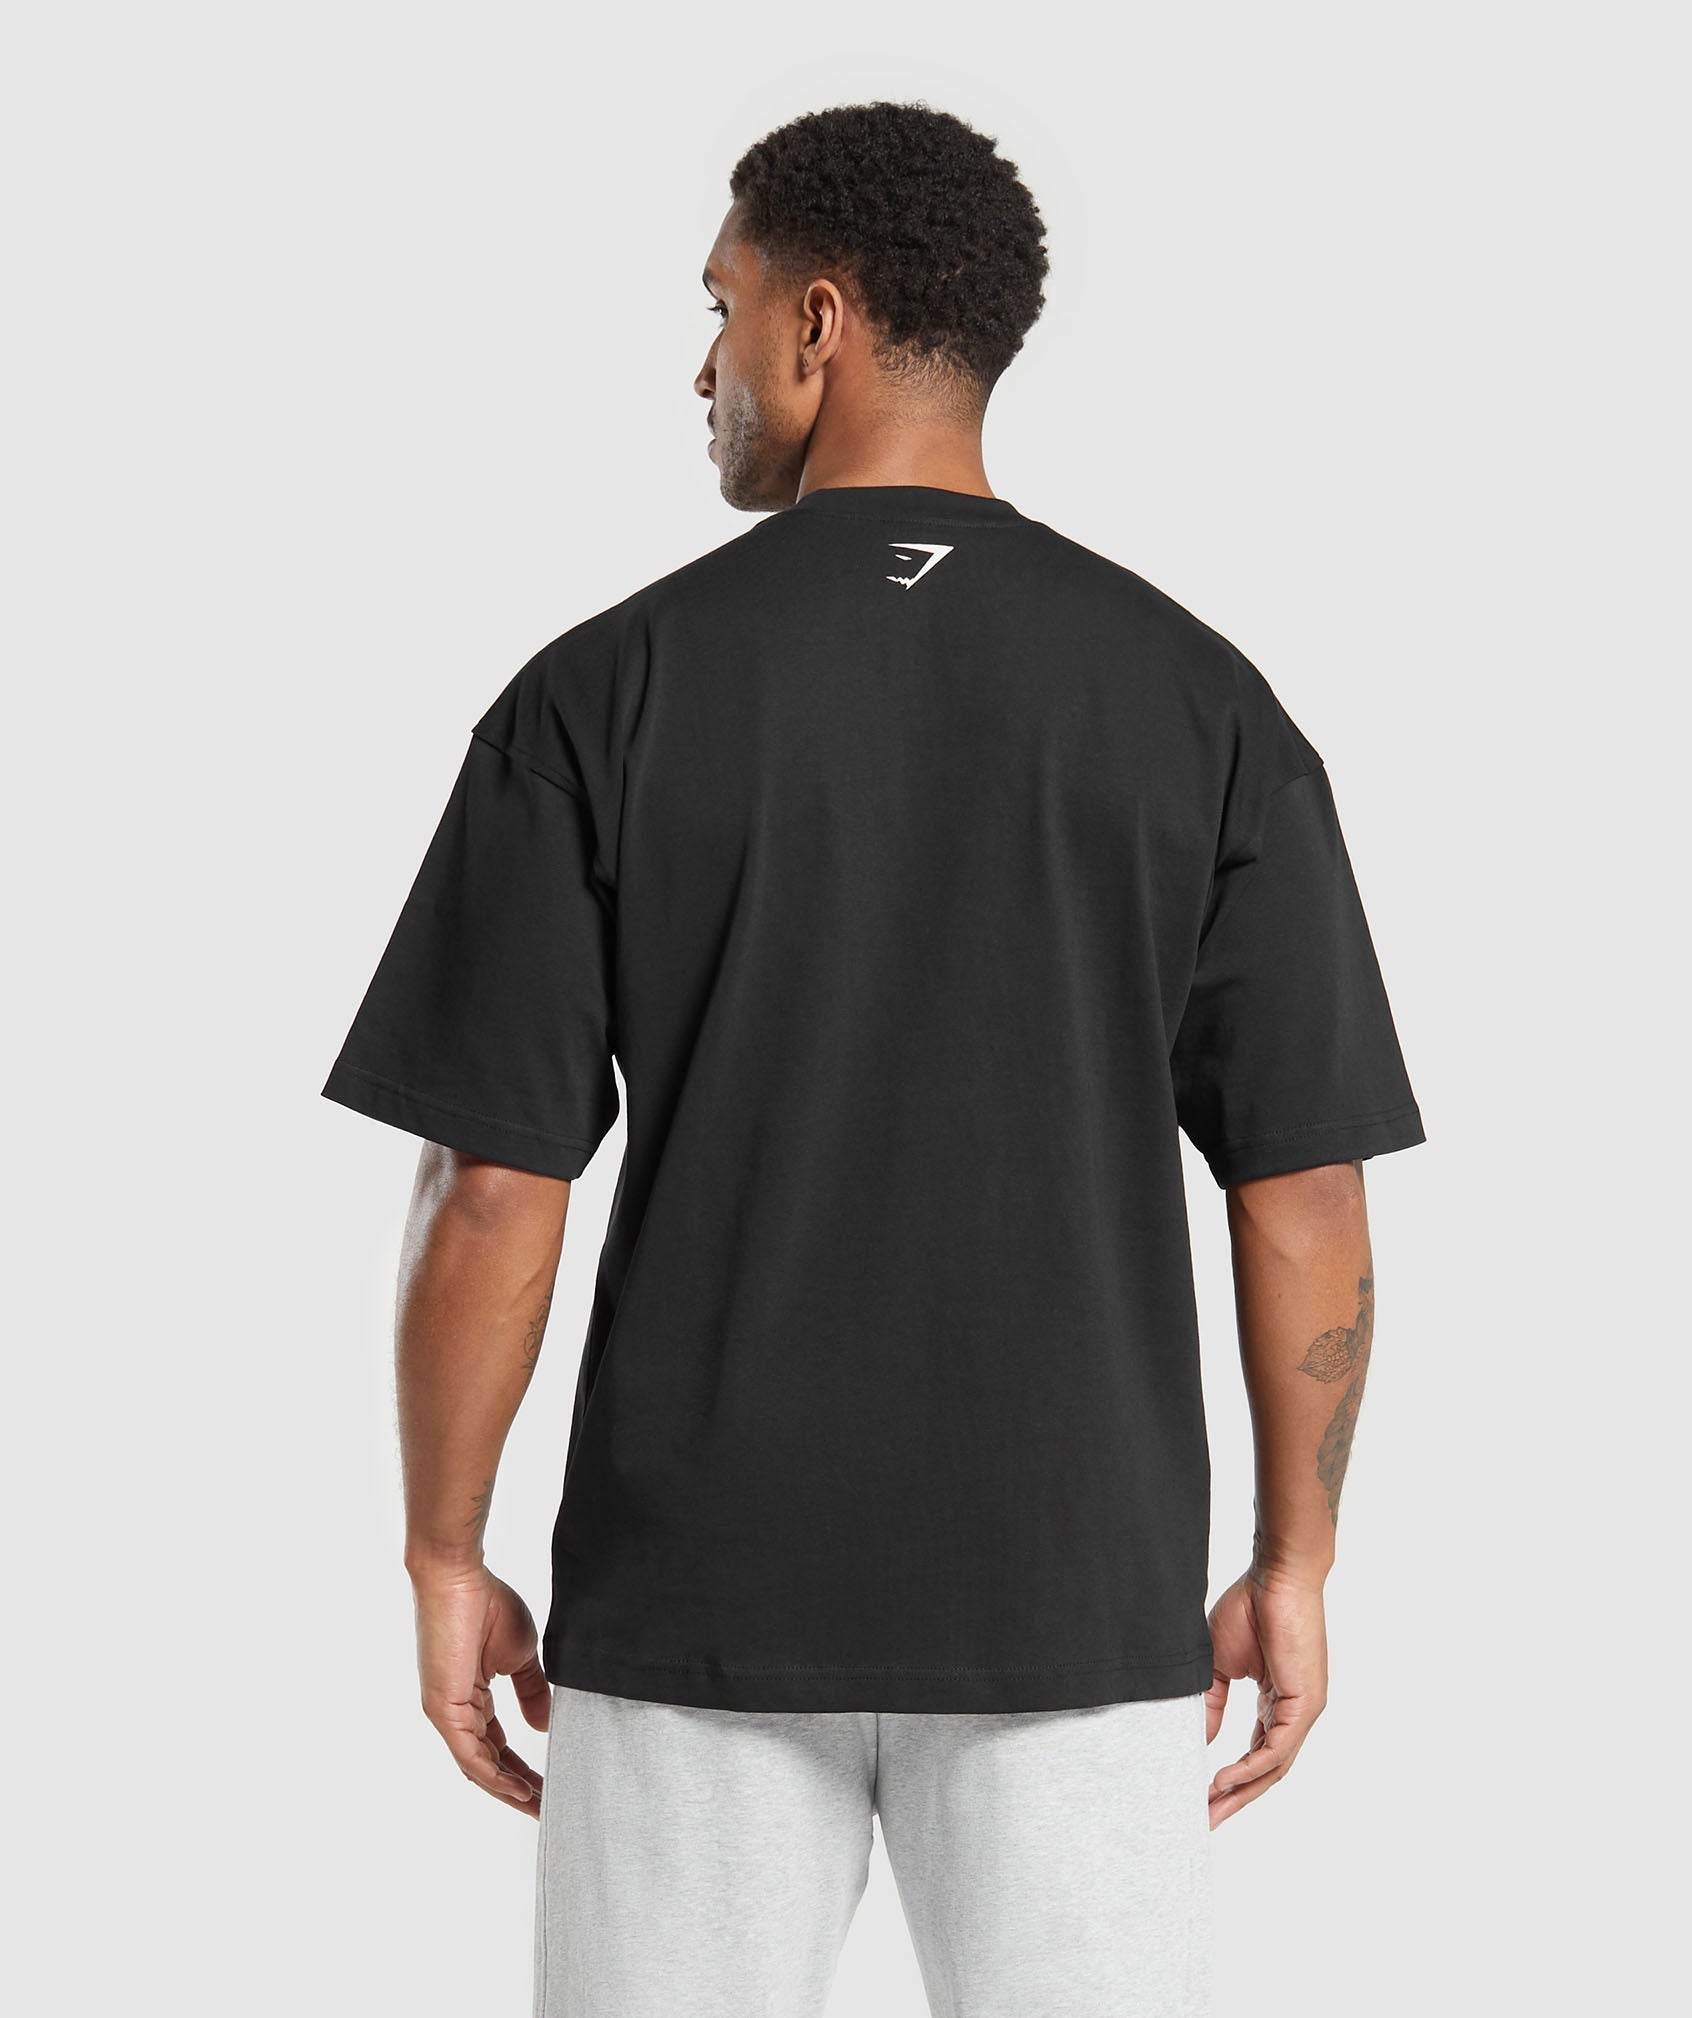 Collegiate T-Shirt in Black - view 2